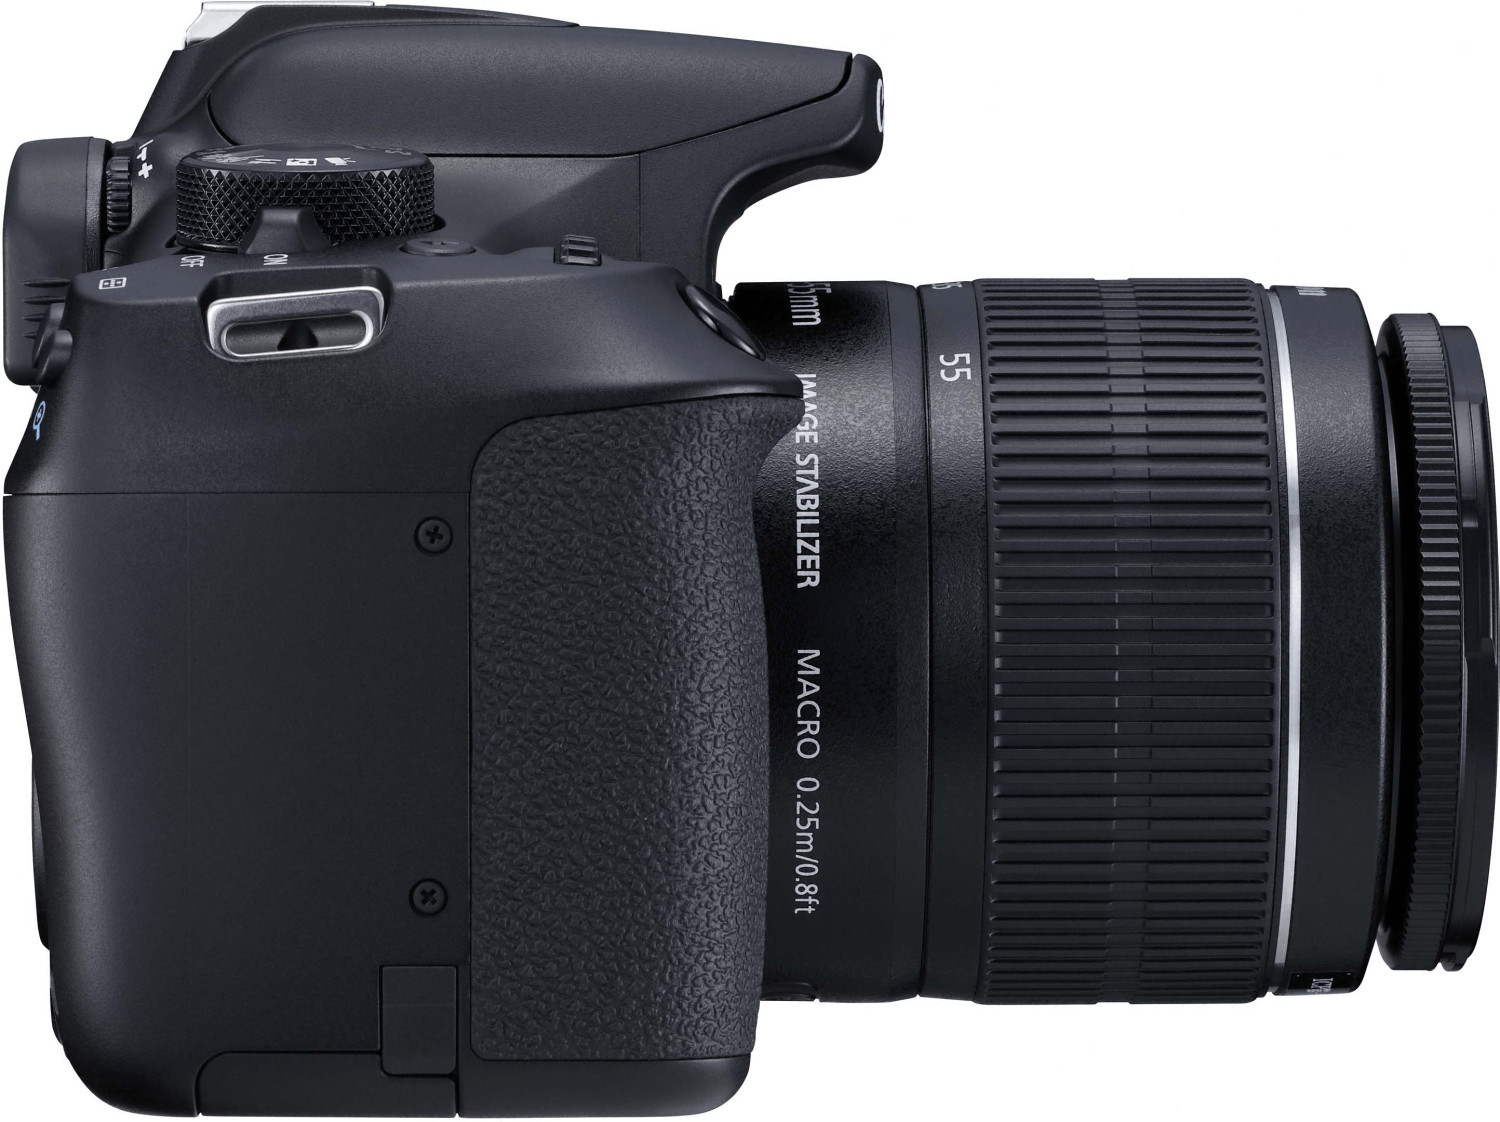 Appareil Photo Canon EOS 1300D avec son kit